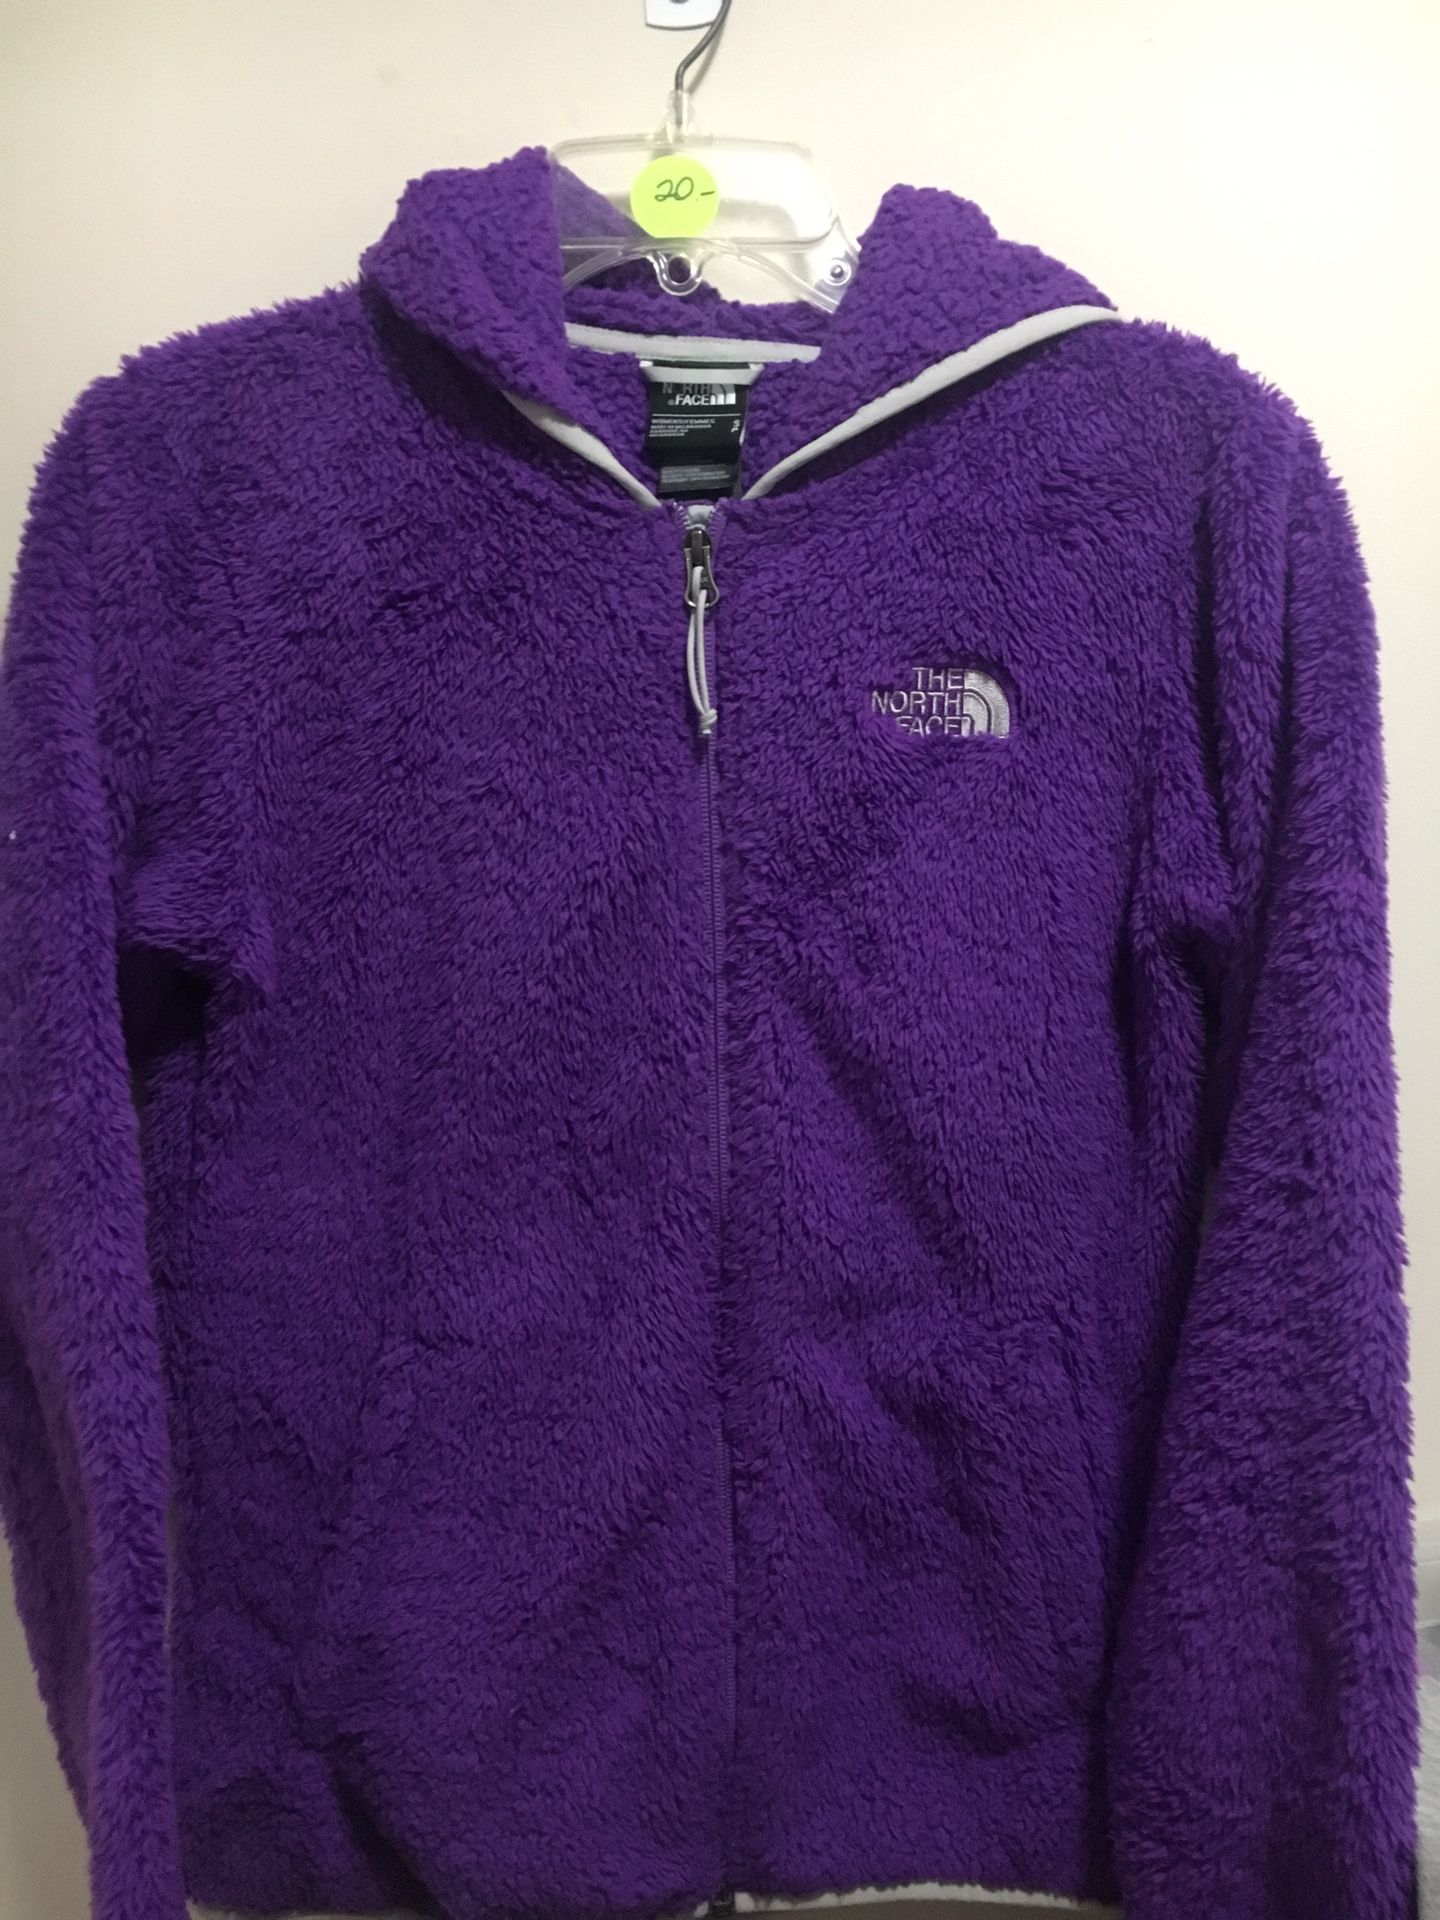 North Face osito fleece jacket purple w/Hoodie Women’s Size Small